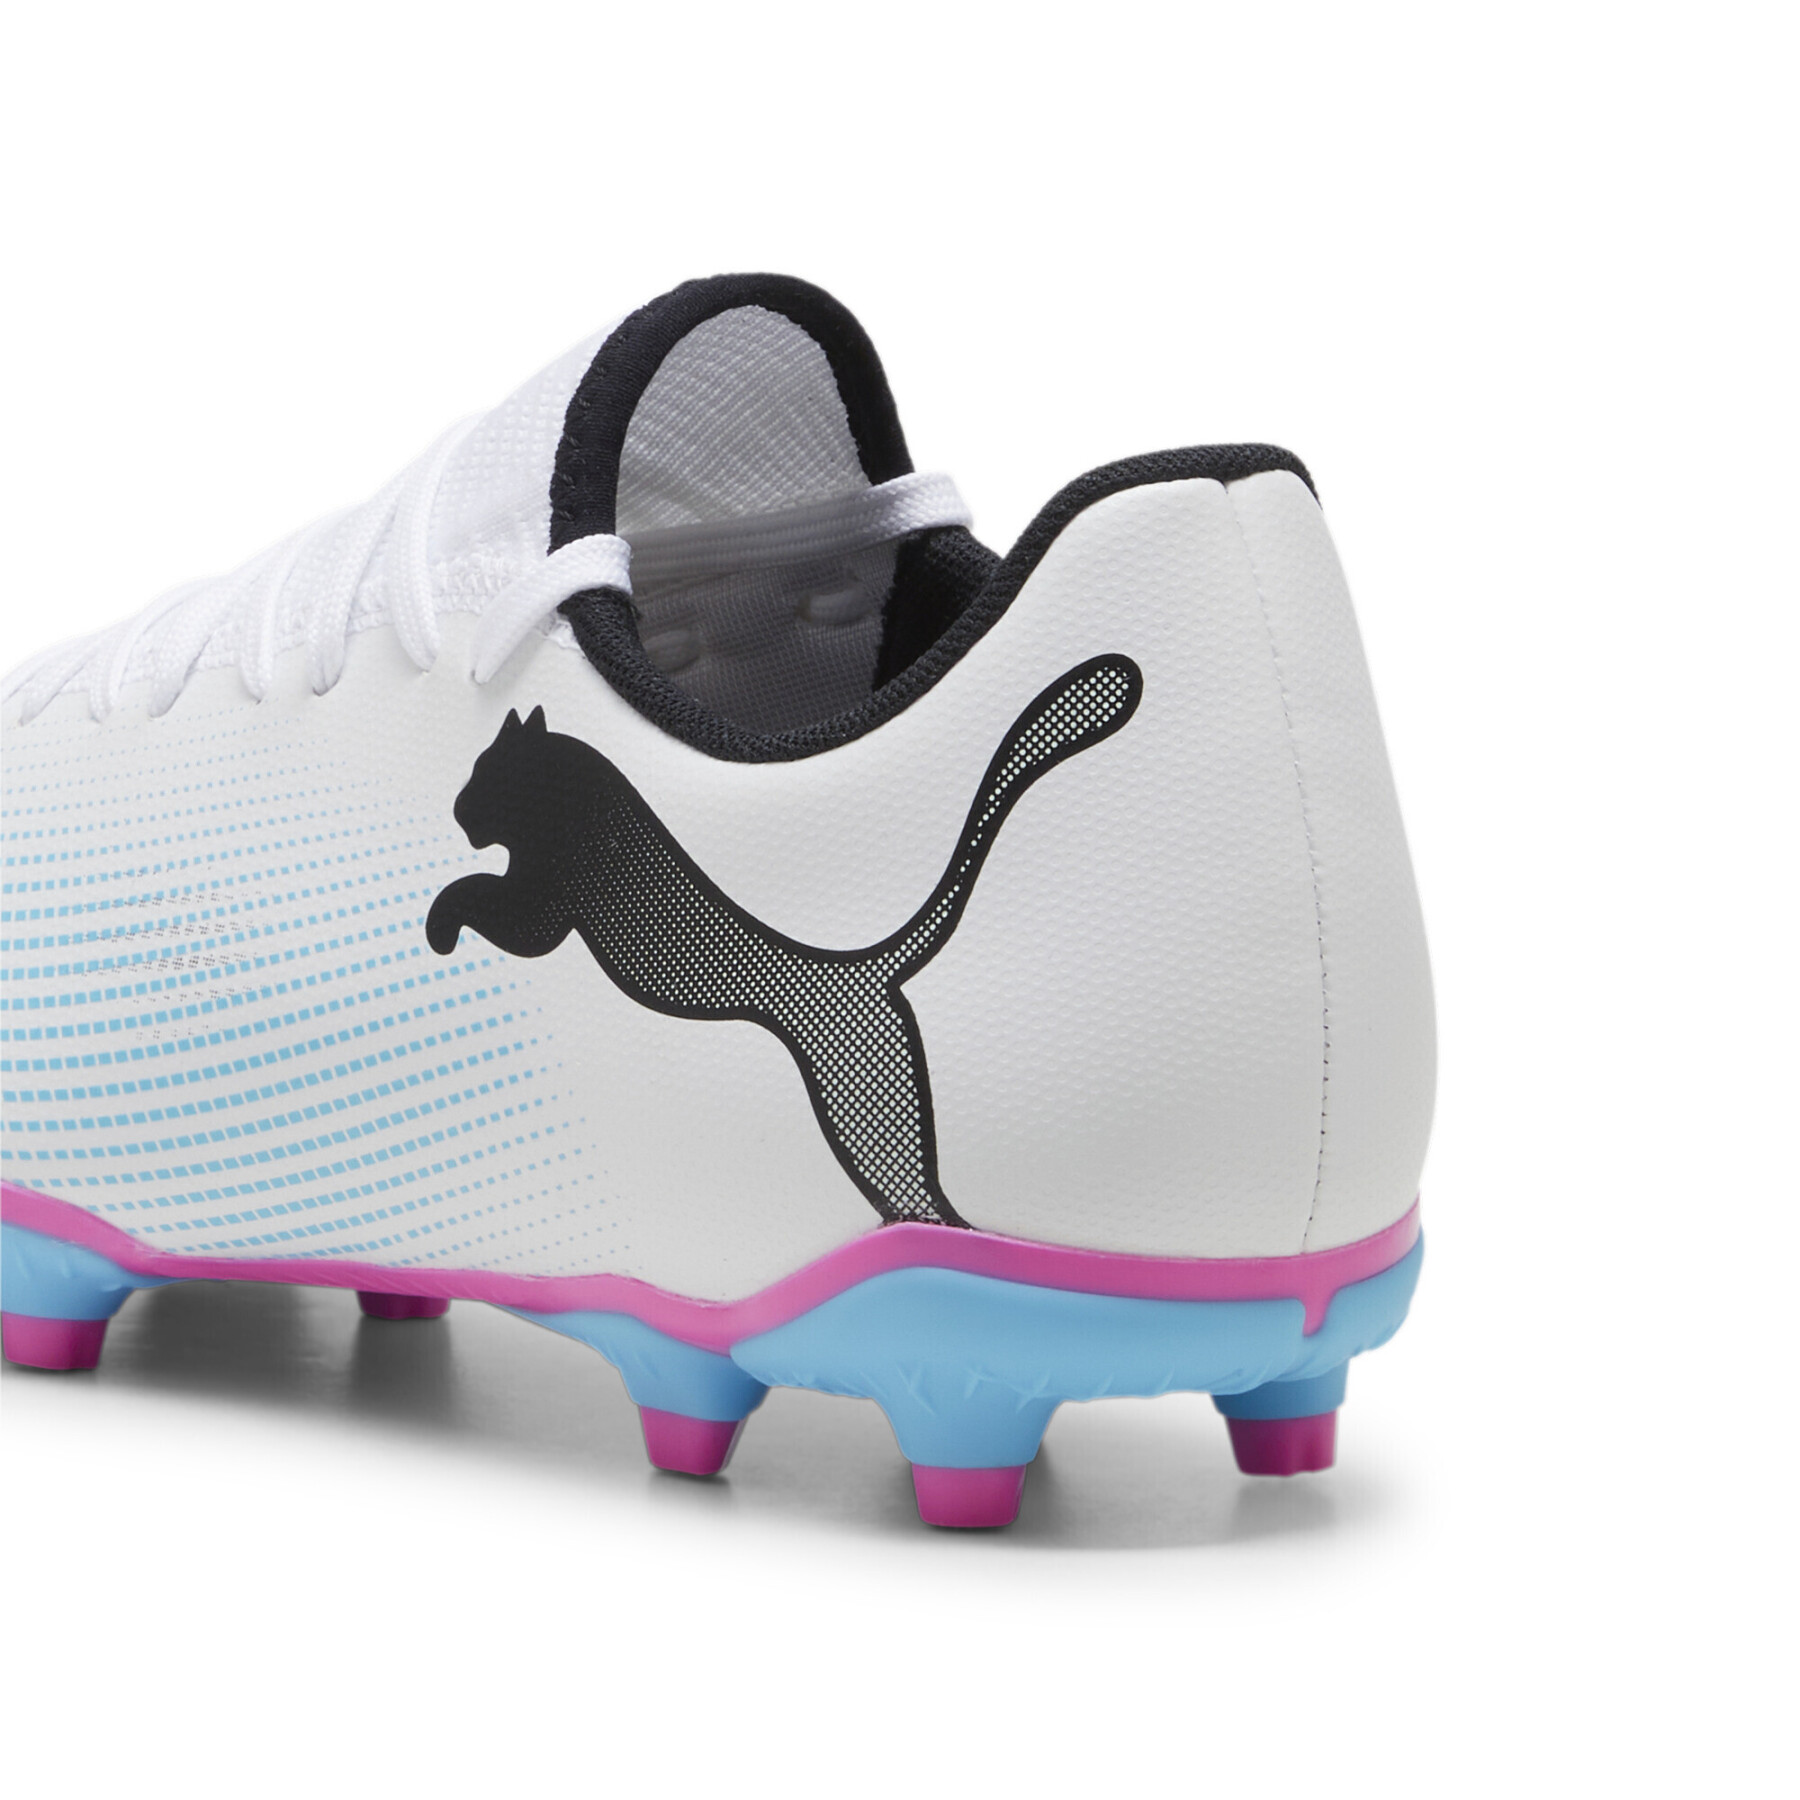 Soccer shoes Puma Future 7 Play FG/AG